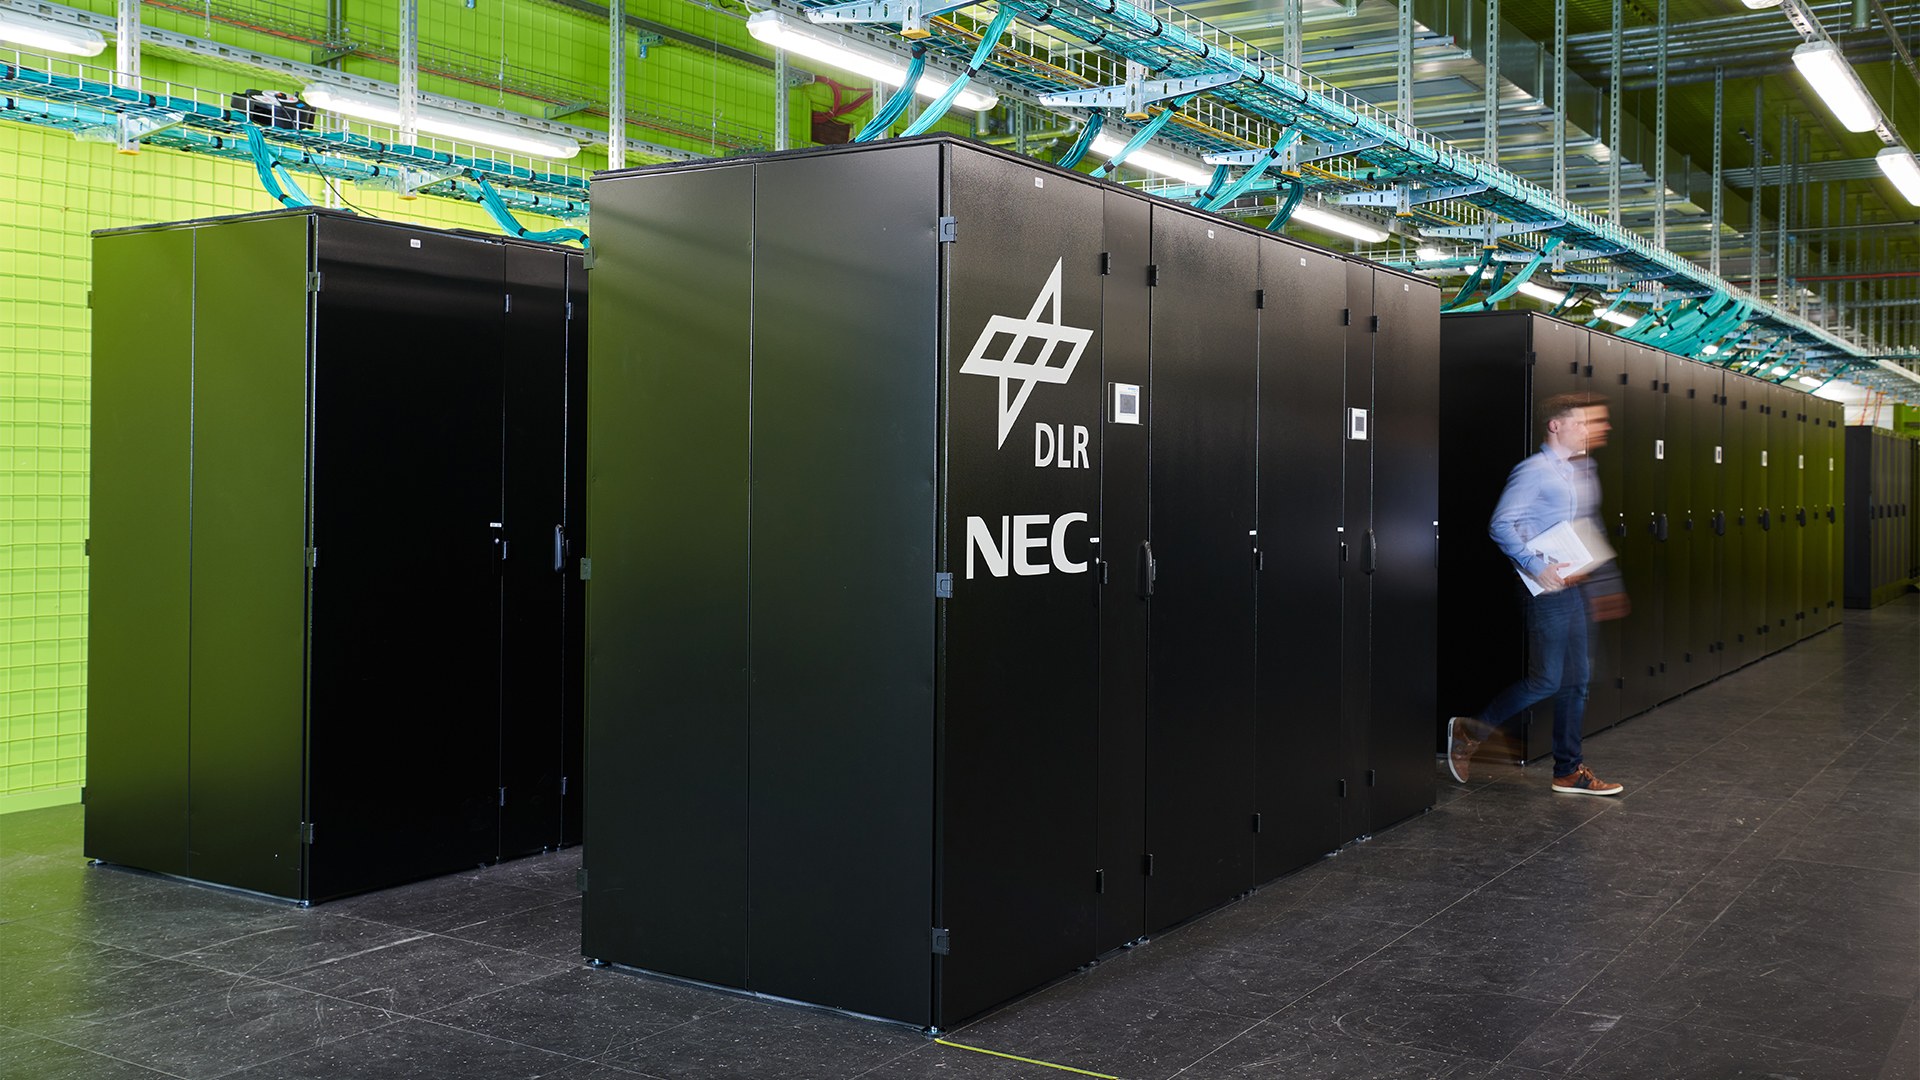 The CARA supercomputer